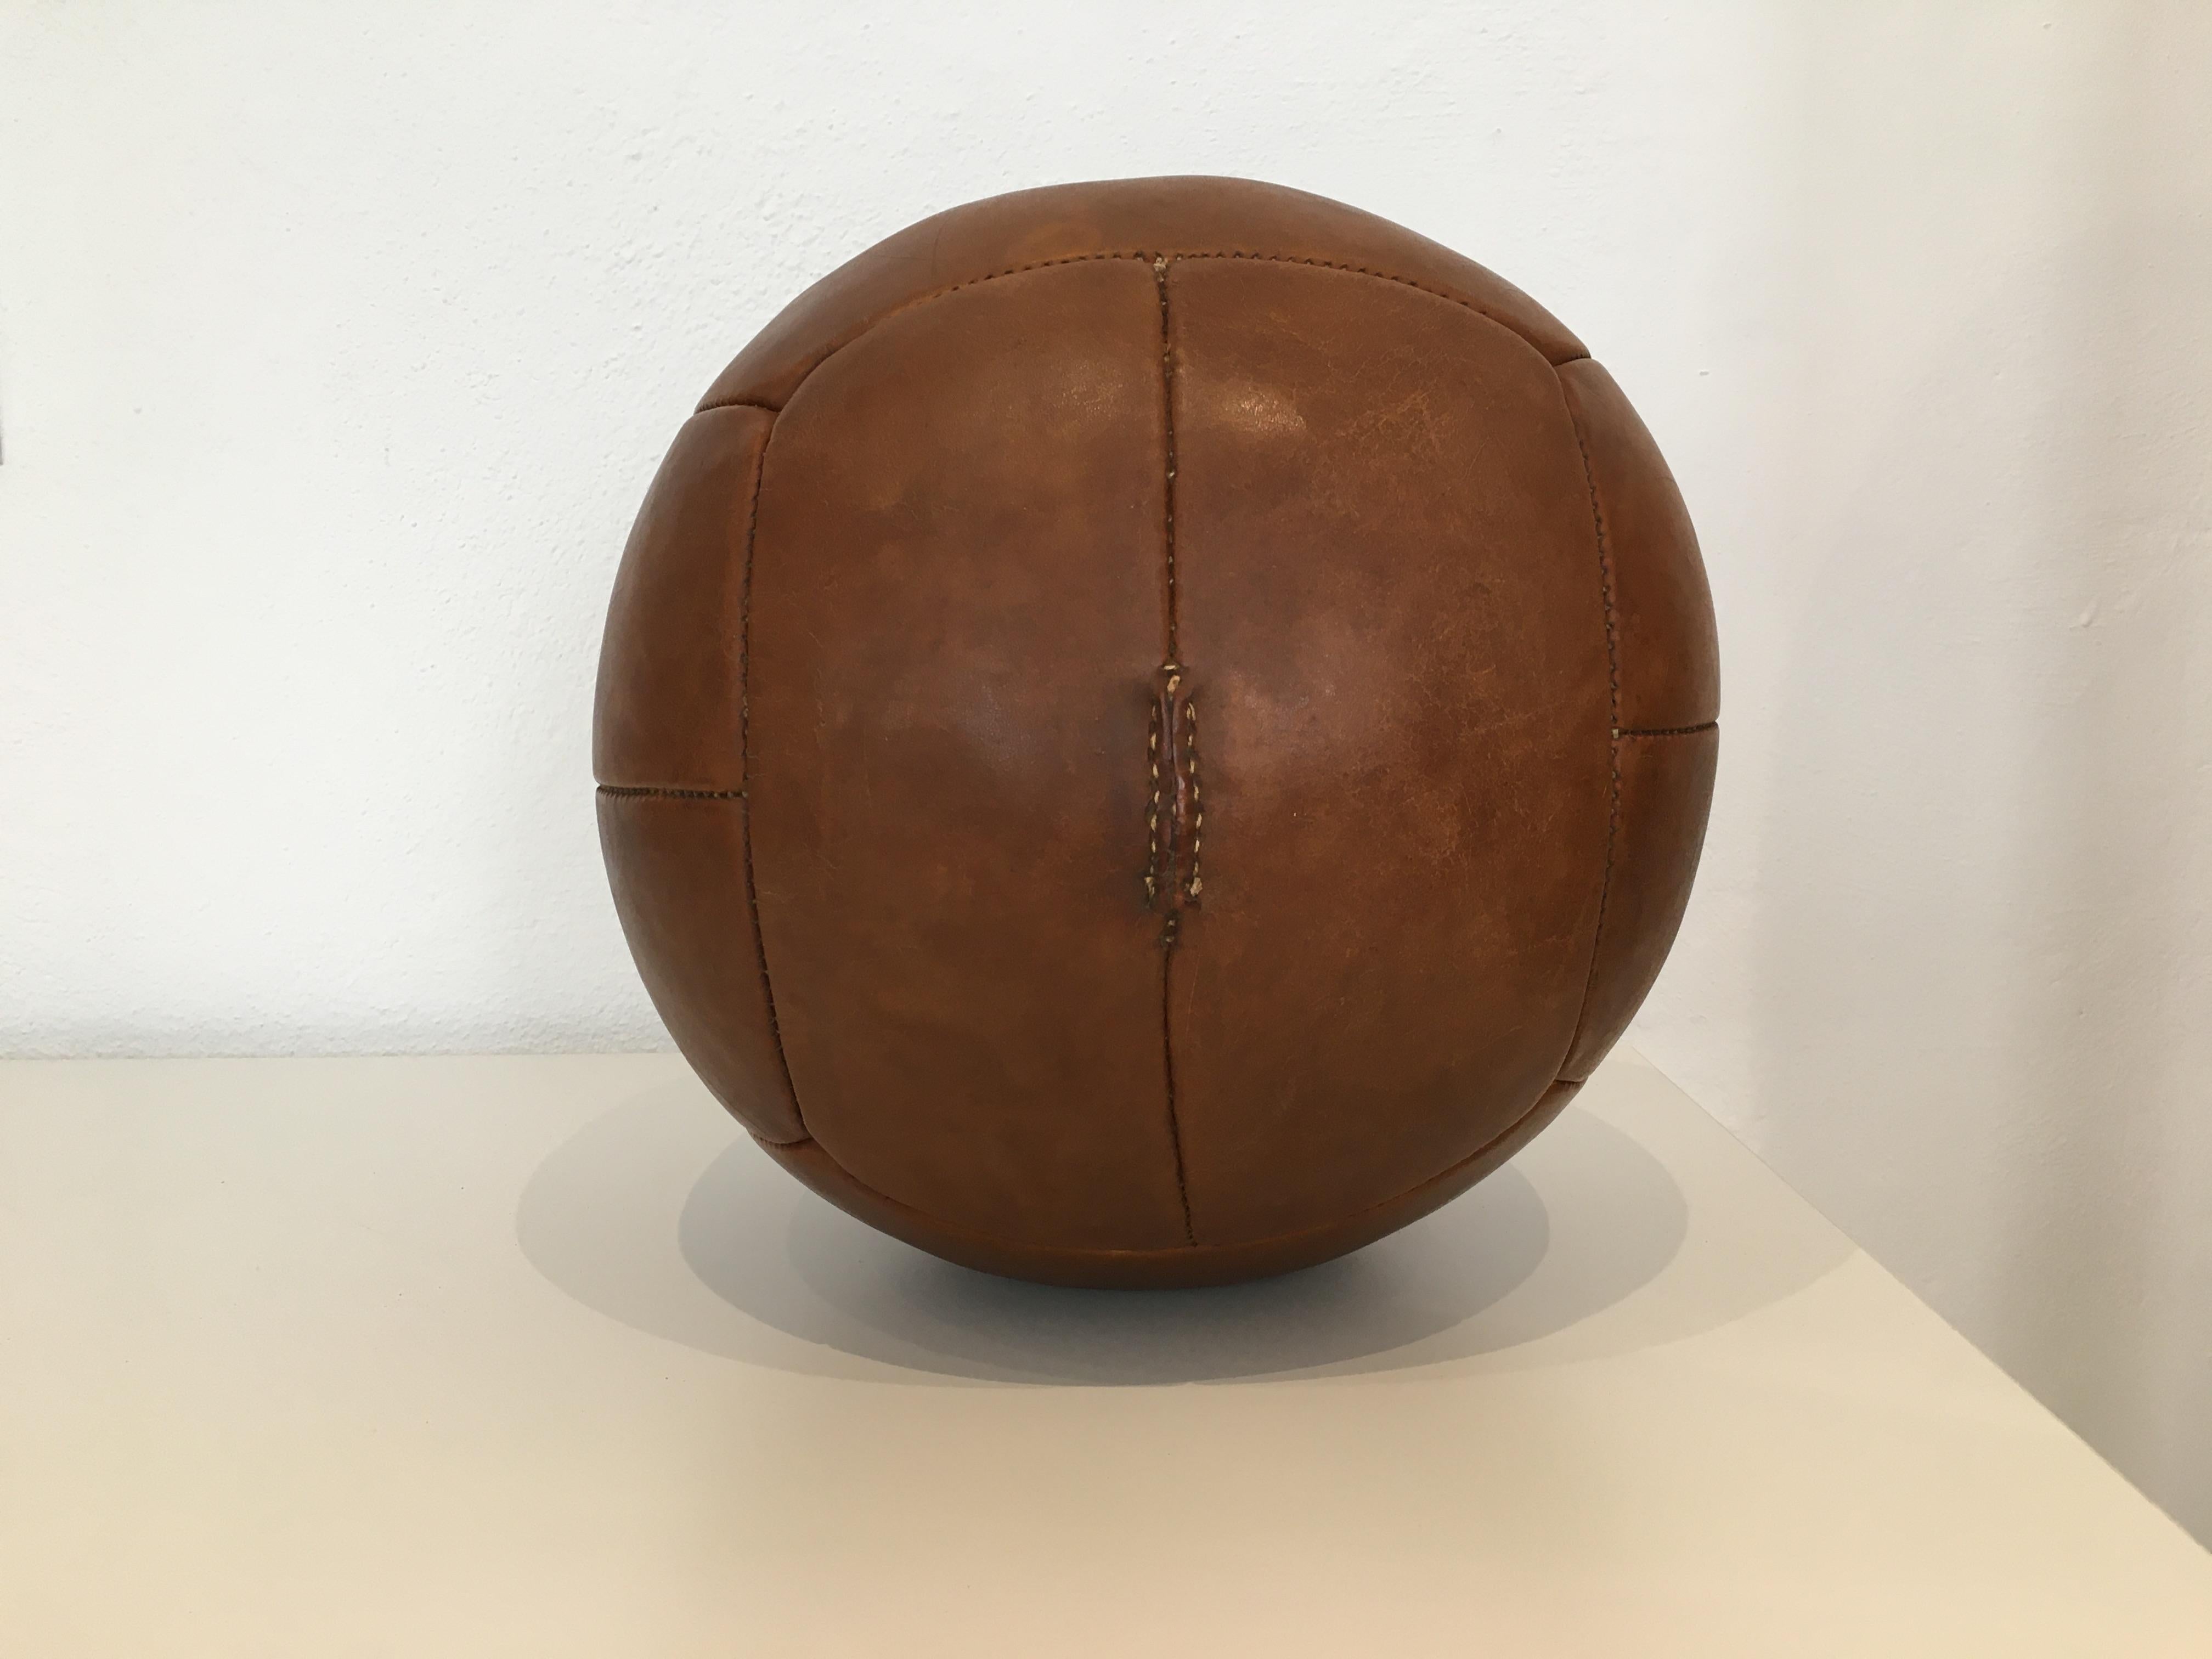 Czech Vintage Brown Leather Medicine Ball, 5kg, 1930s